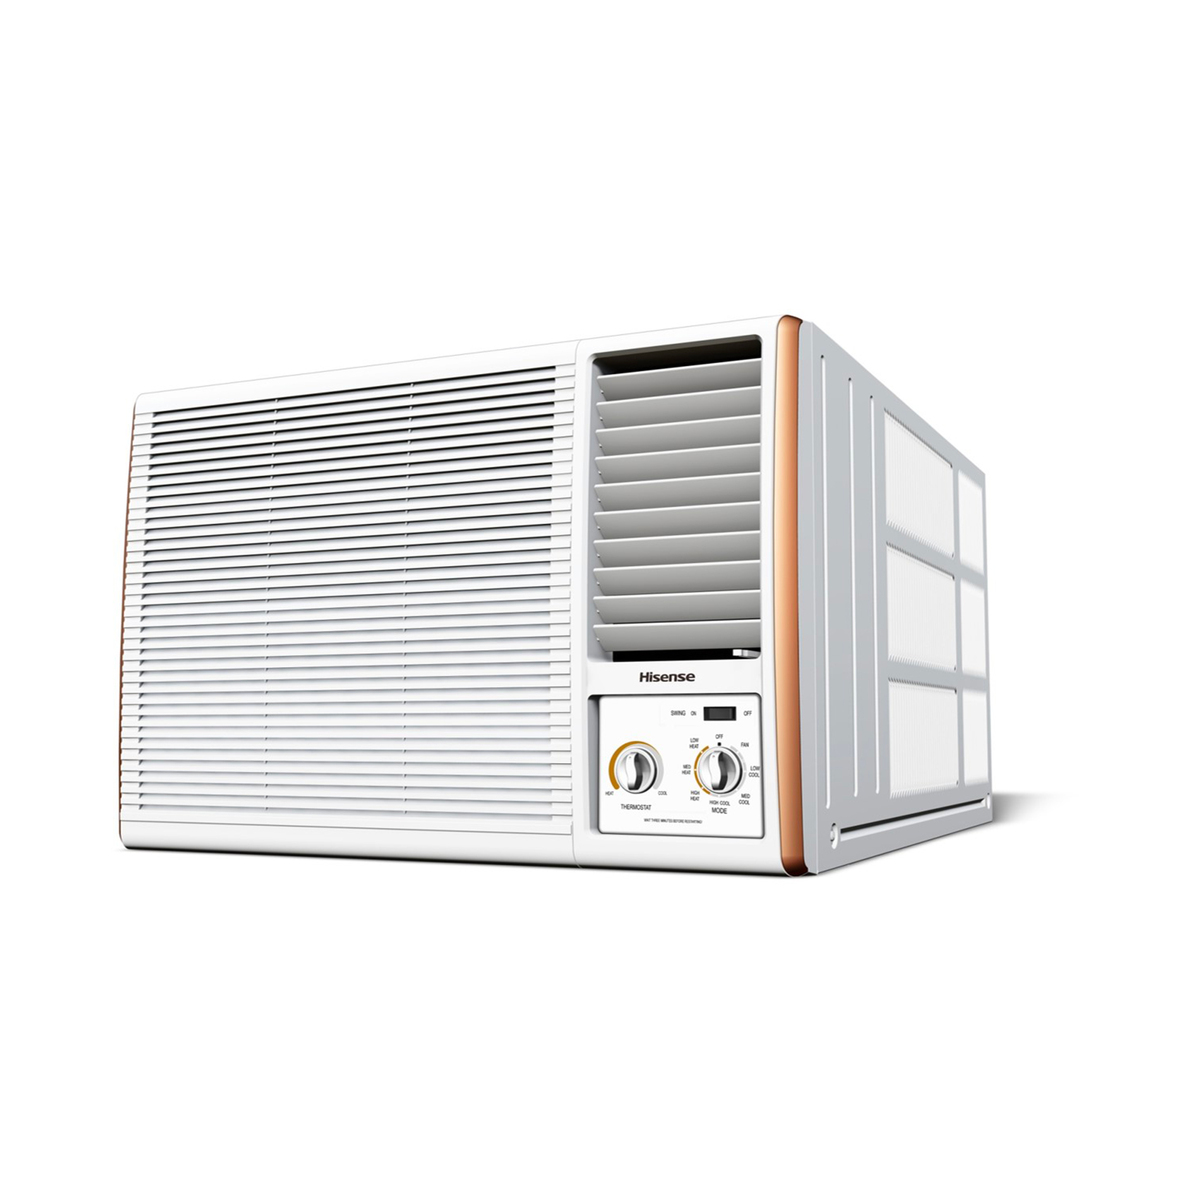 Hisense Window Air Conditioner AW-24CT4SSBR02 21100BTU